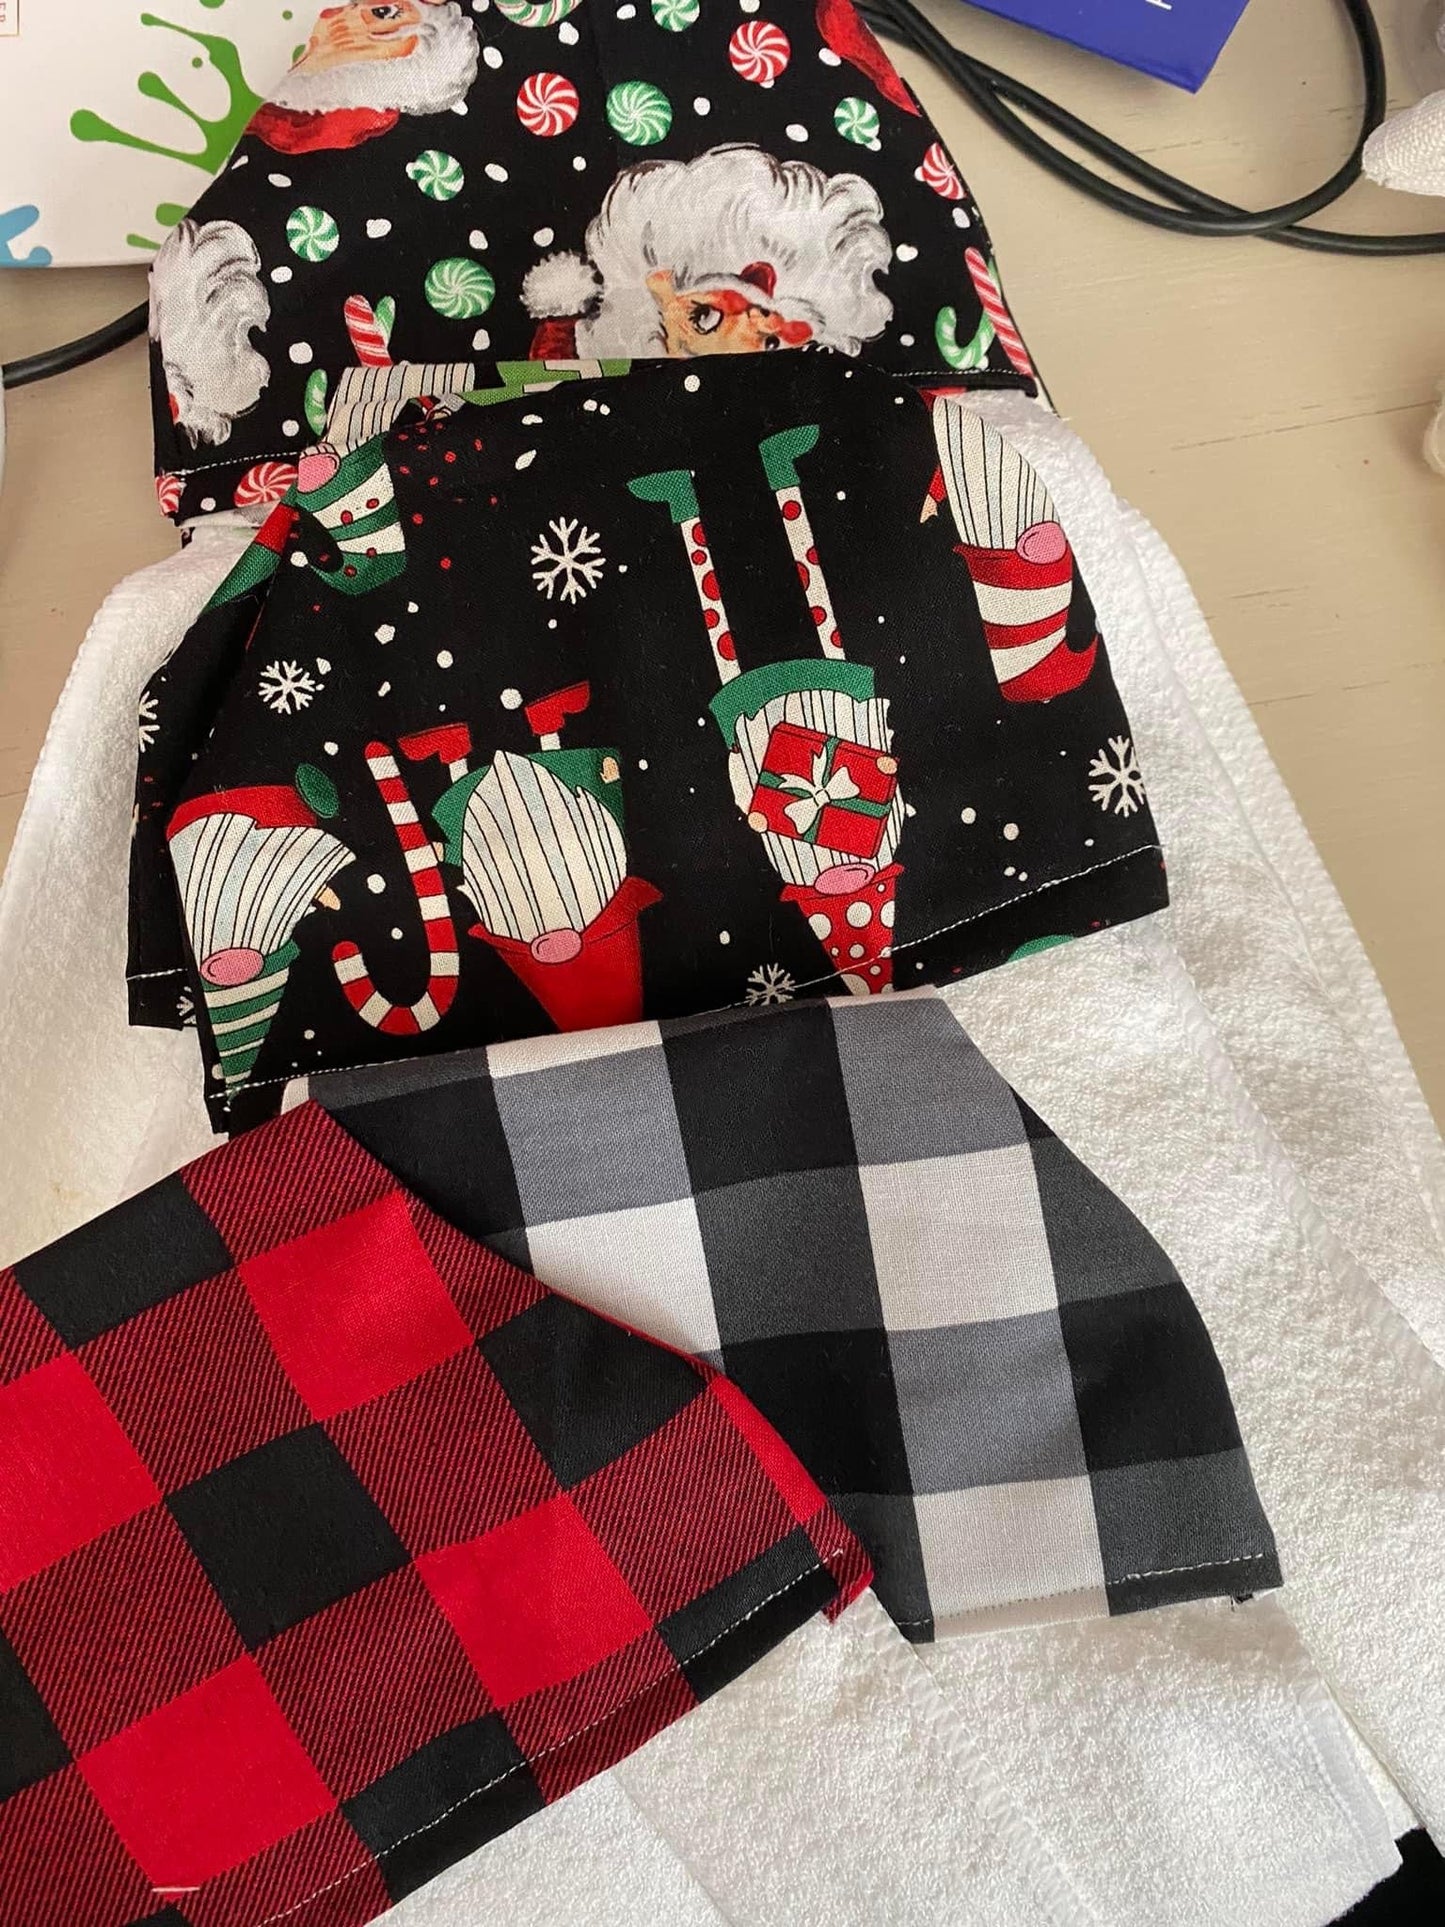 Christmas towels